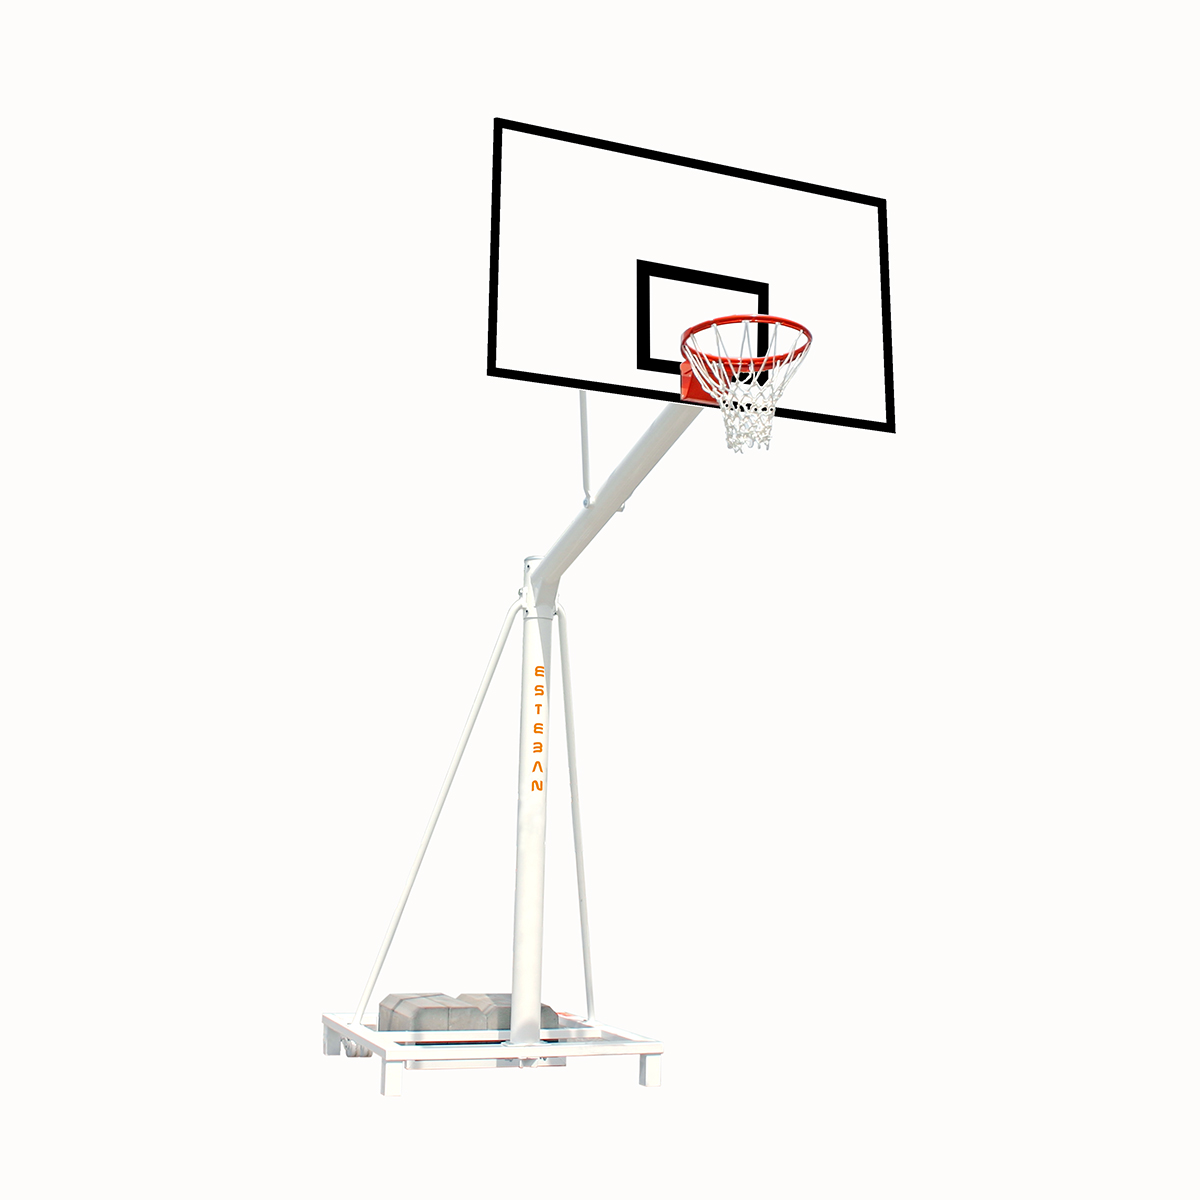 Canasta baloncesto fija tablero fibra de vidrio extensión 125 cm BF12525-1  - ESTEBAN SG&E